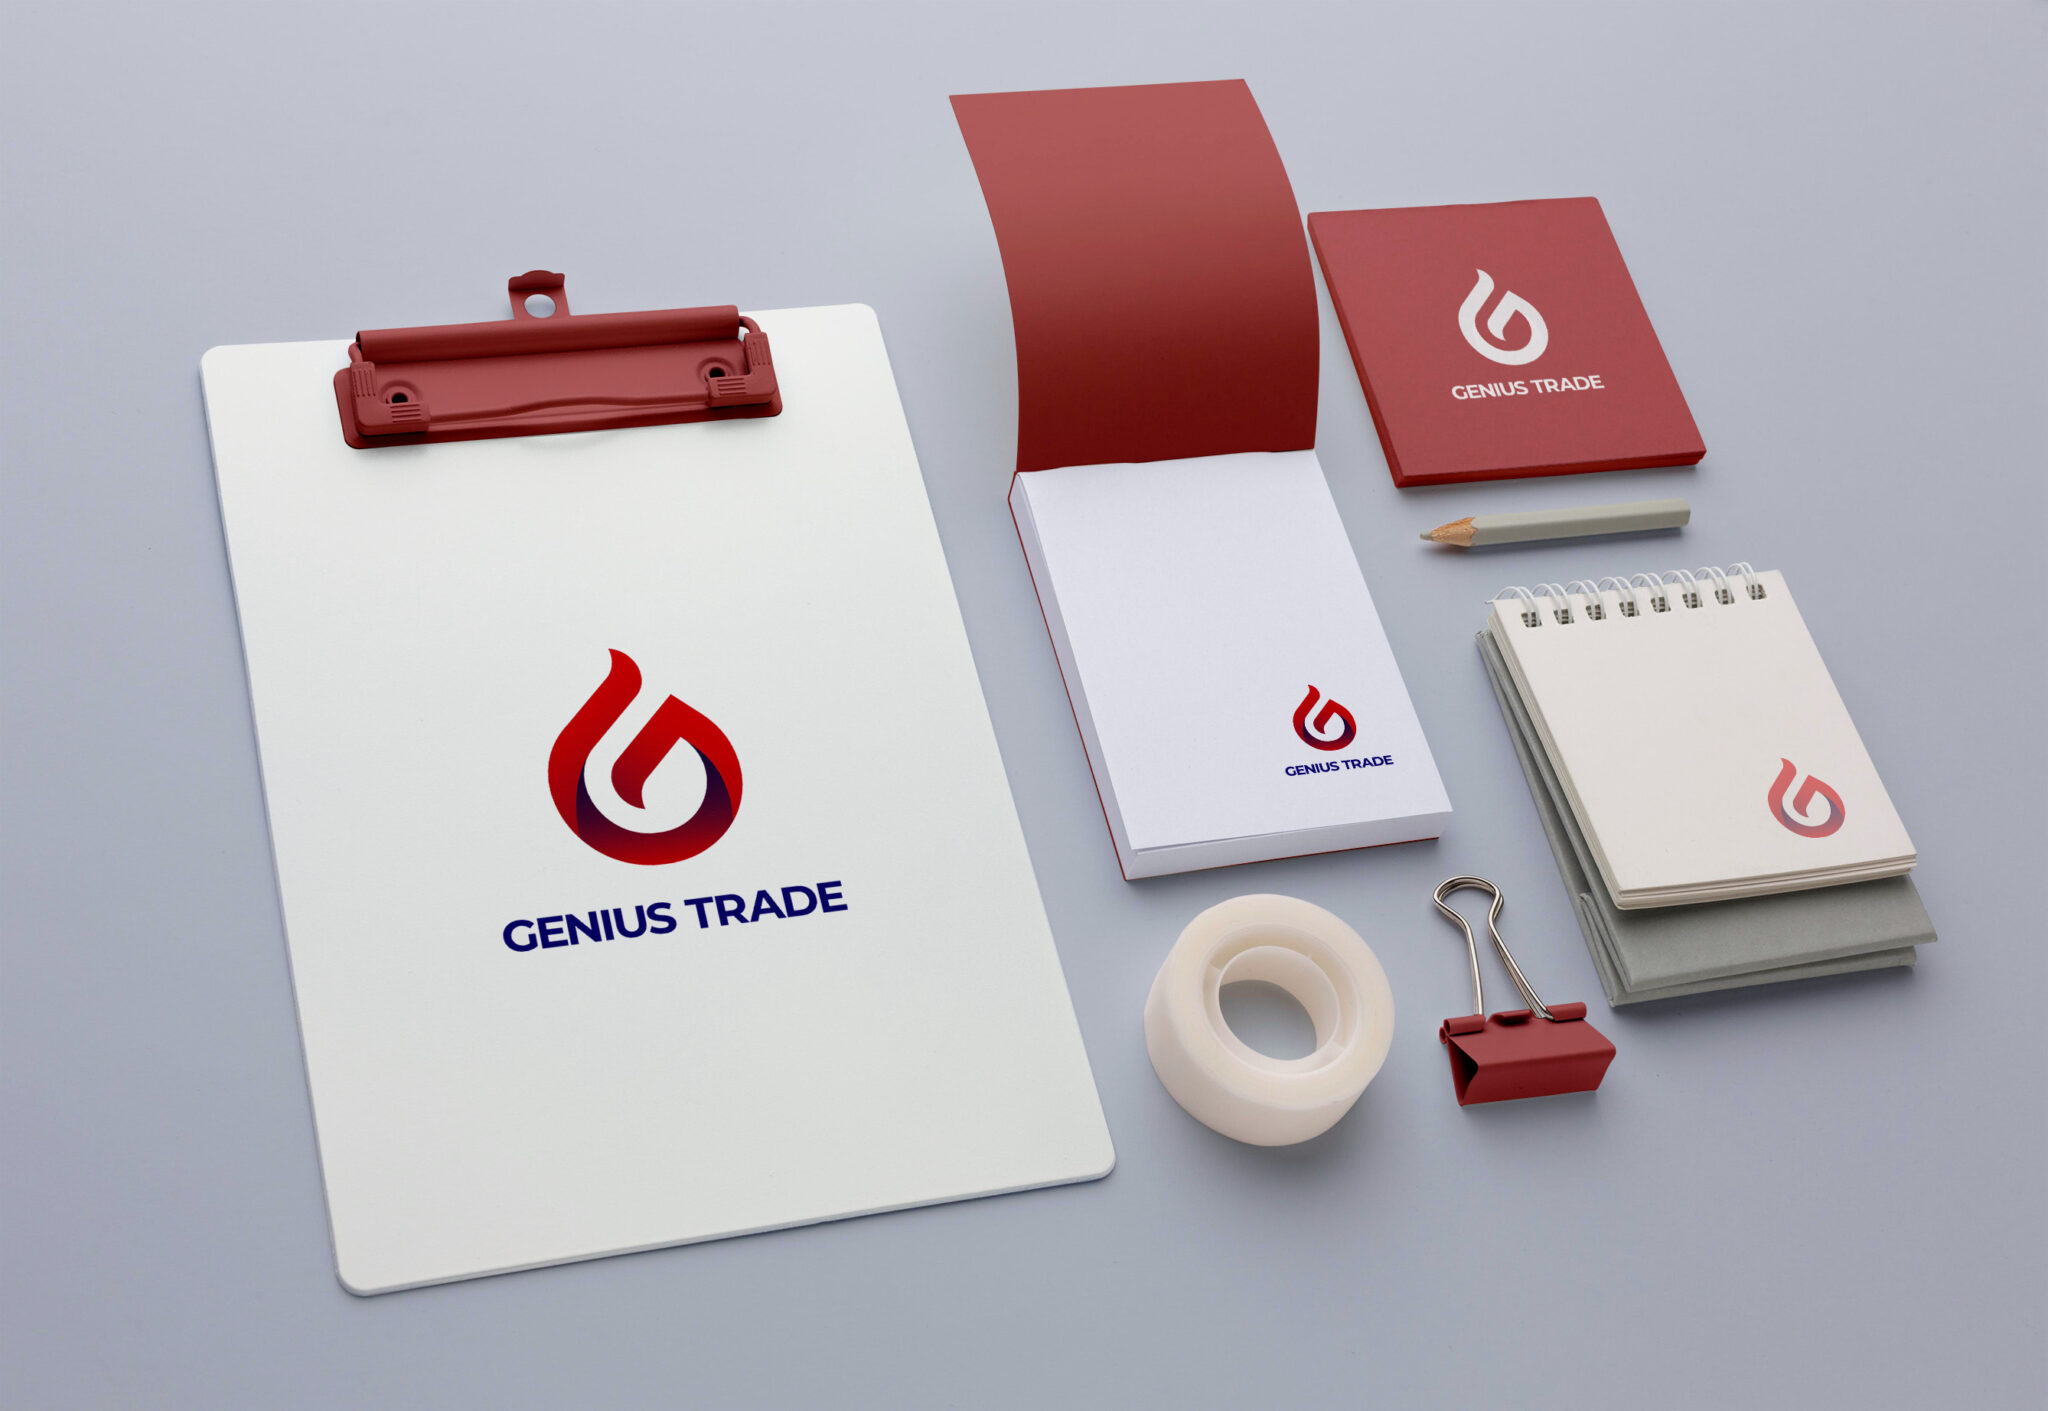 Genius Trade brand identity